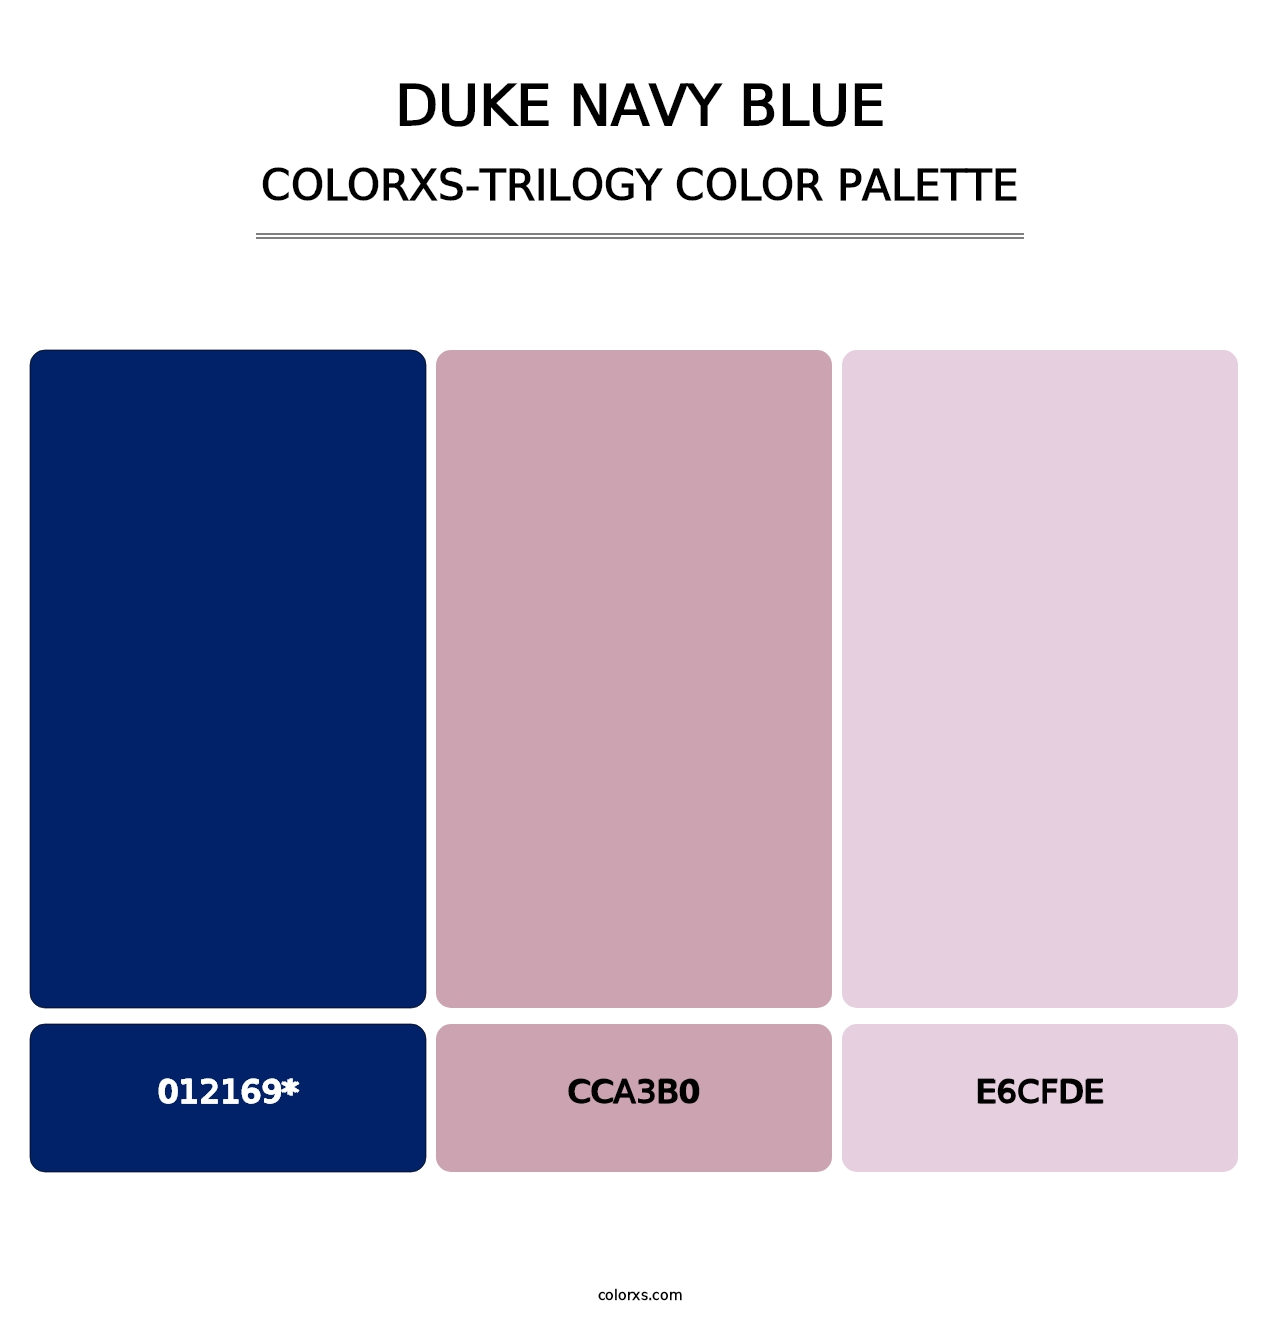 Duke Navy Blue - Colorxs Trilogy Palette